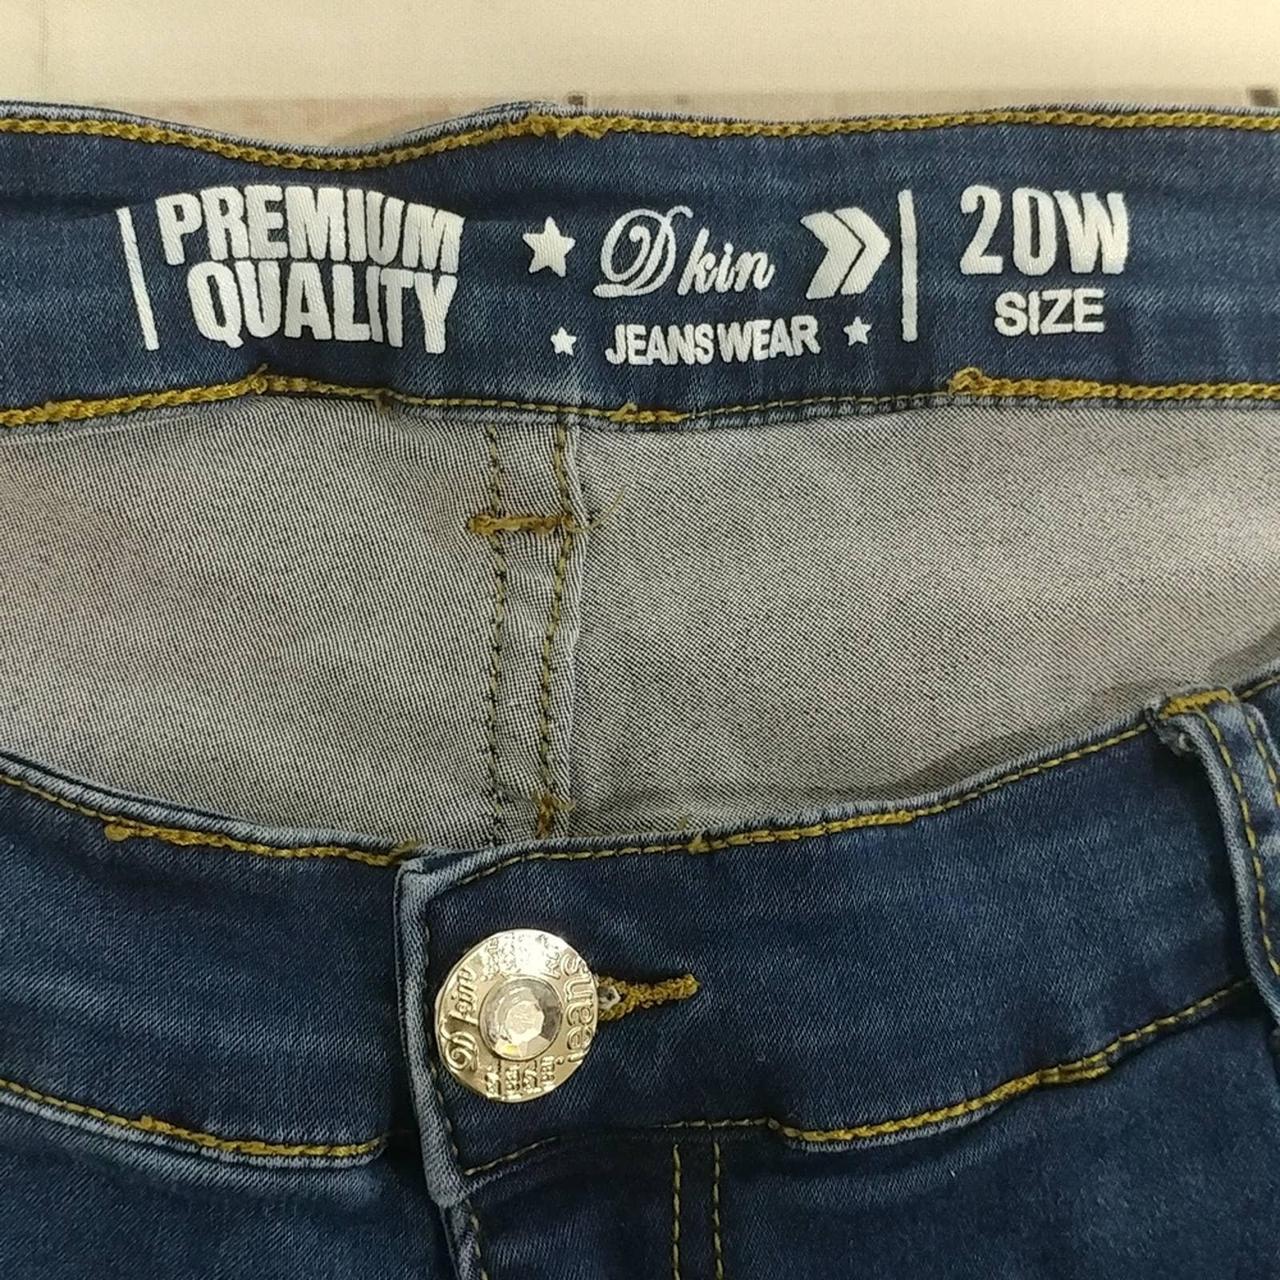 Dkin Jeanswear premium quality blue jeans with... - Depop